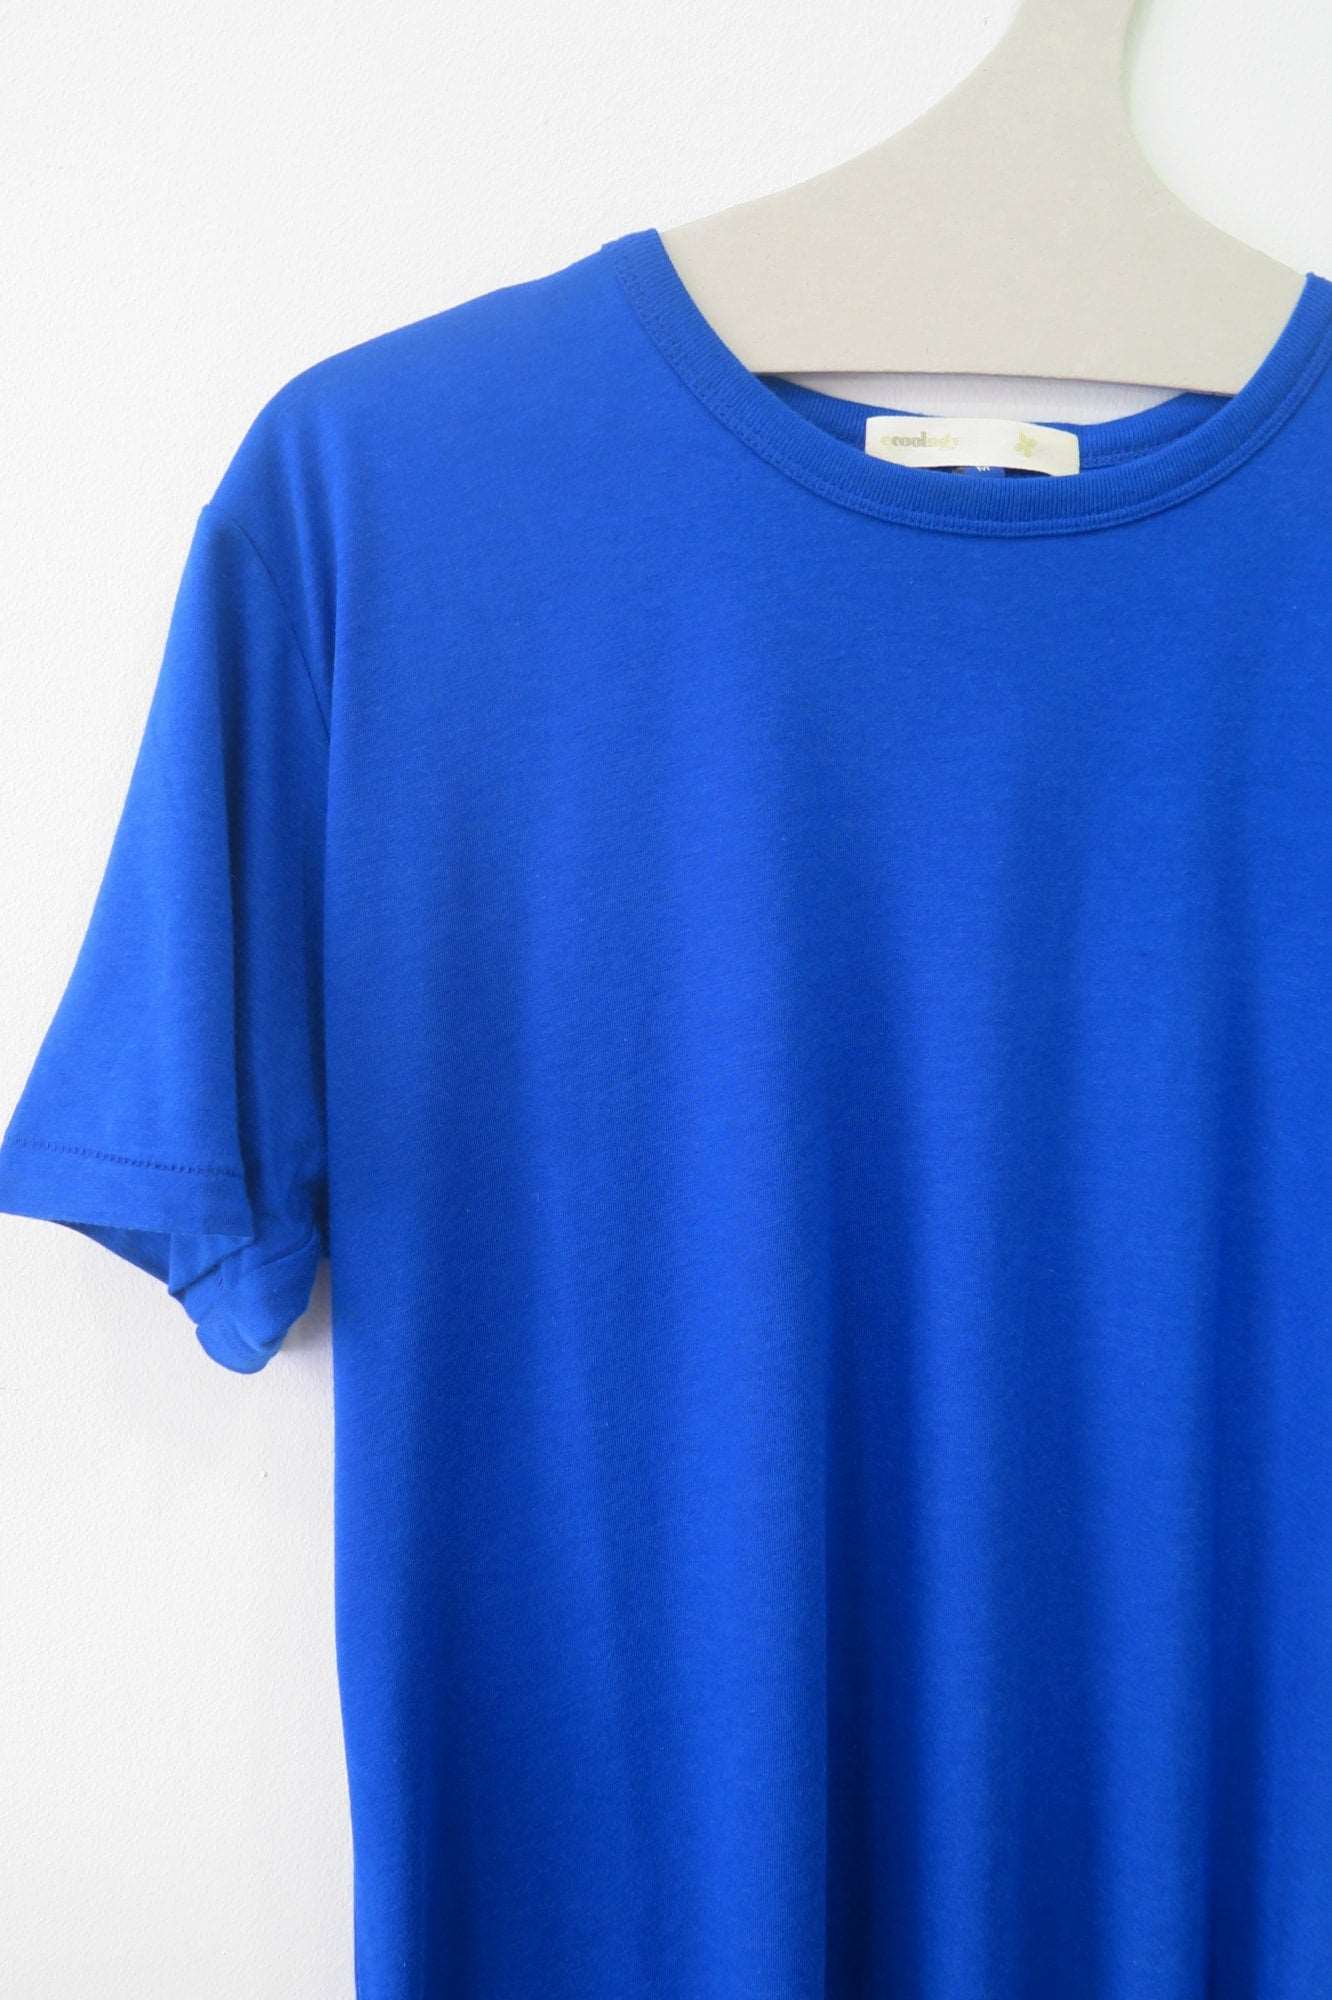 Camiseta azul klein de algodón orgánico y bambú